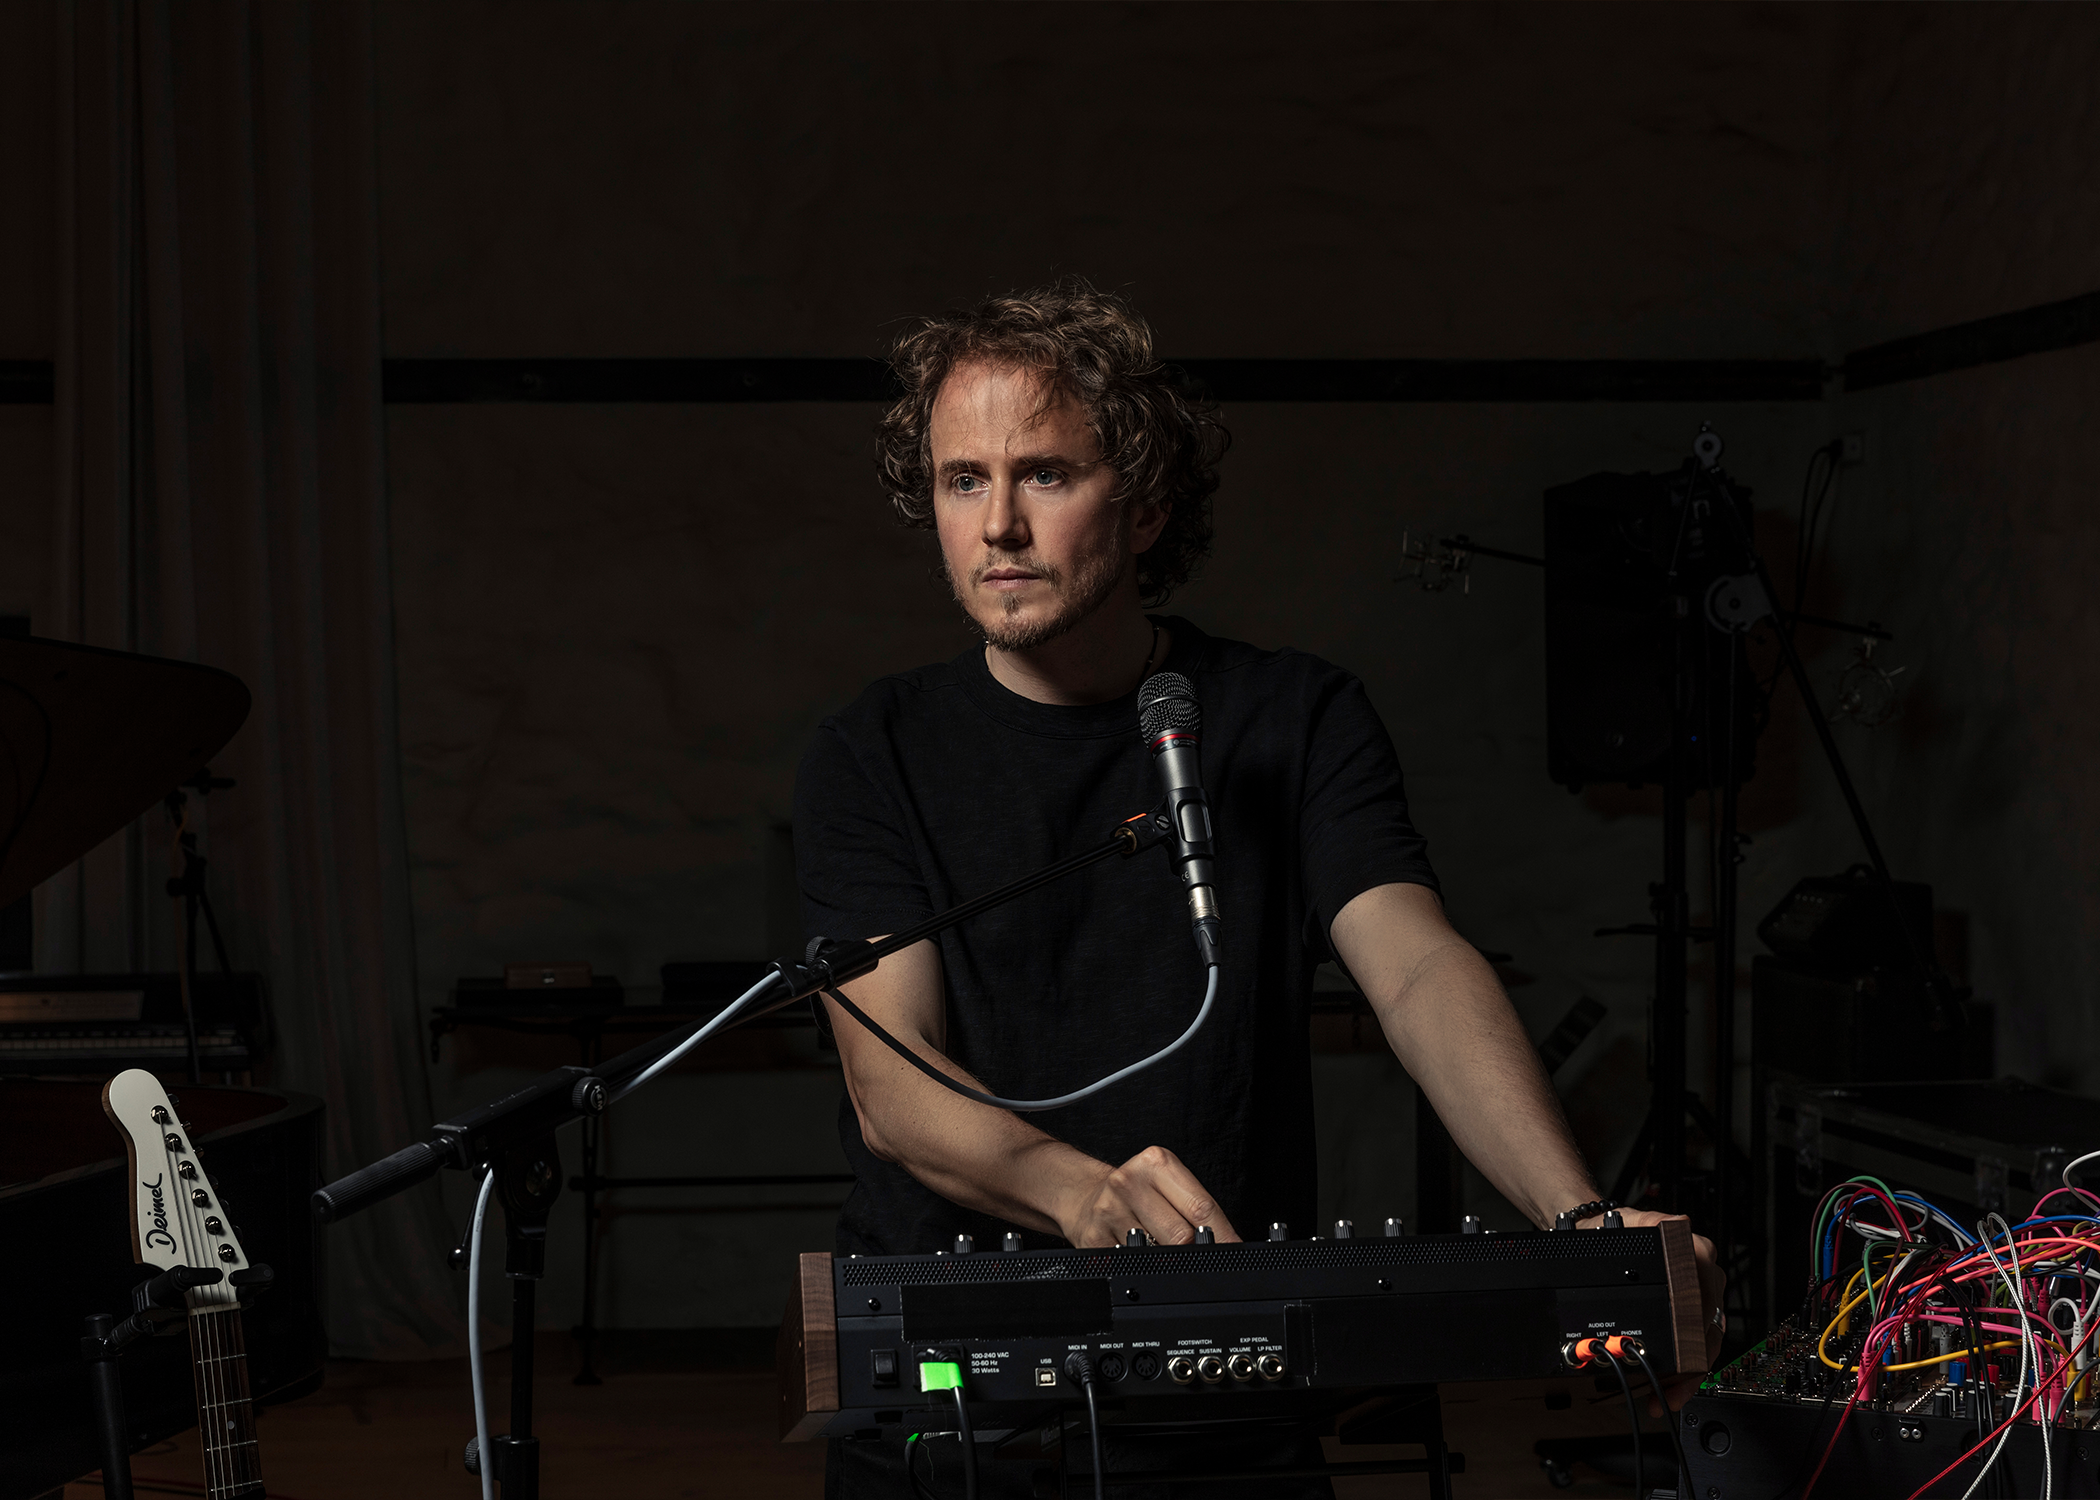 David Chalmin using electronic music equipment